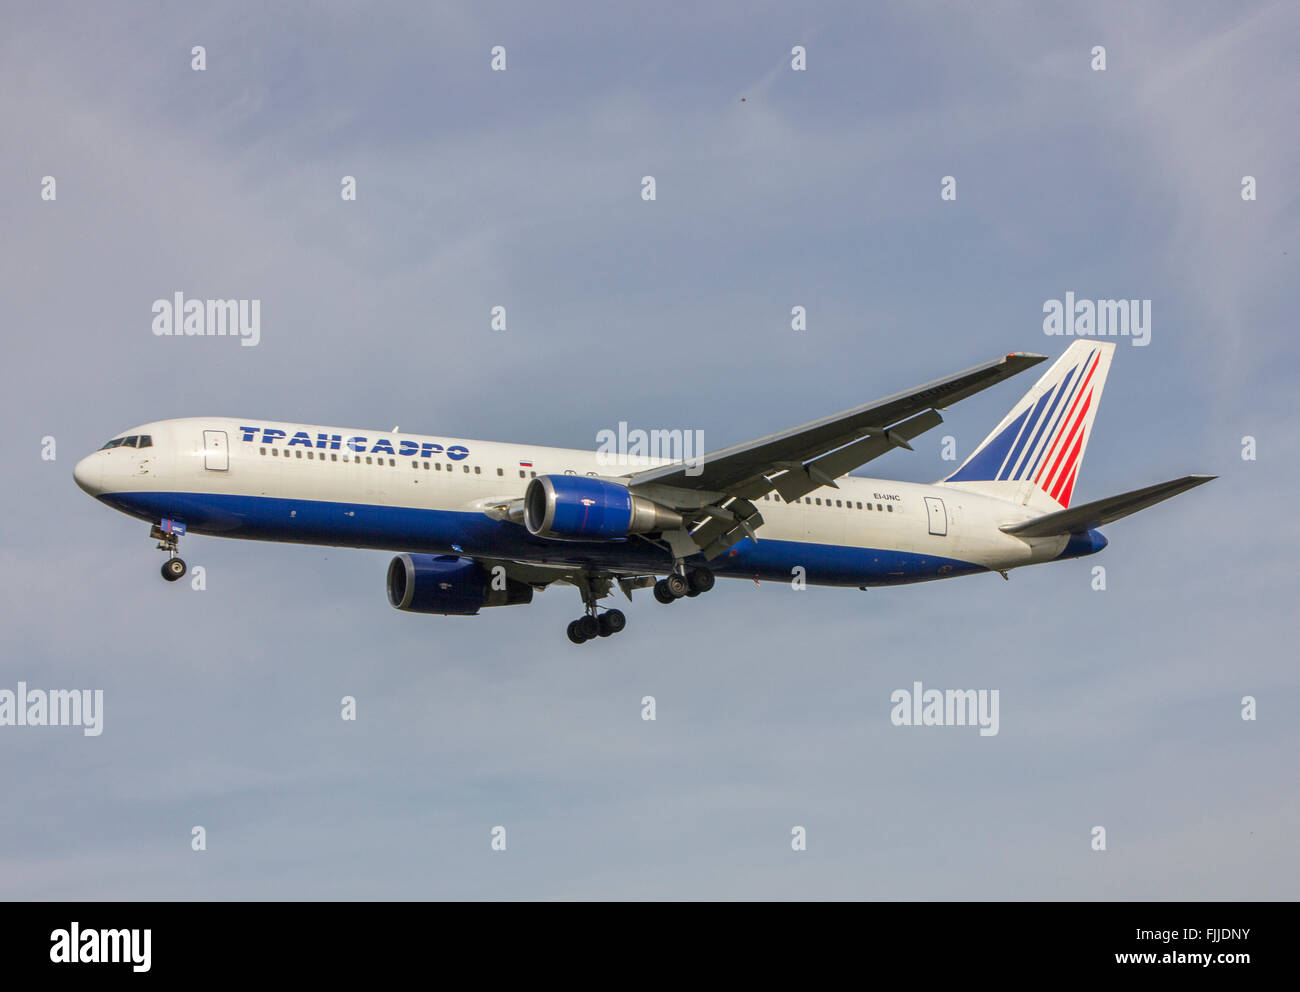 Boeing 767 Transaero  Airlines landing at LHR London Heathrow Airport Stock Photo